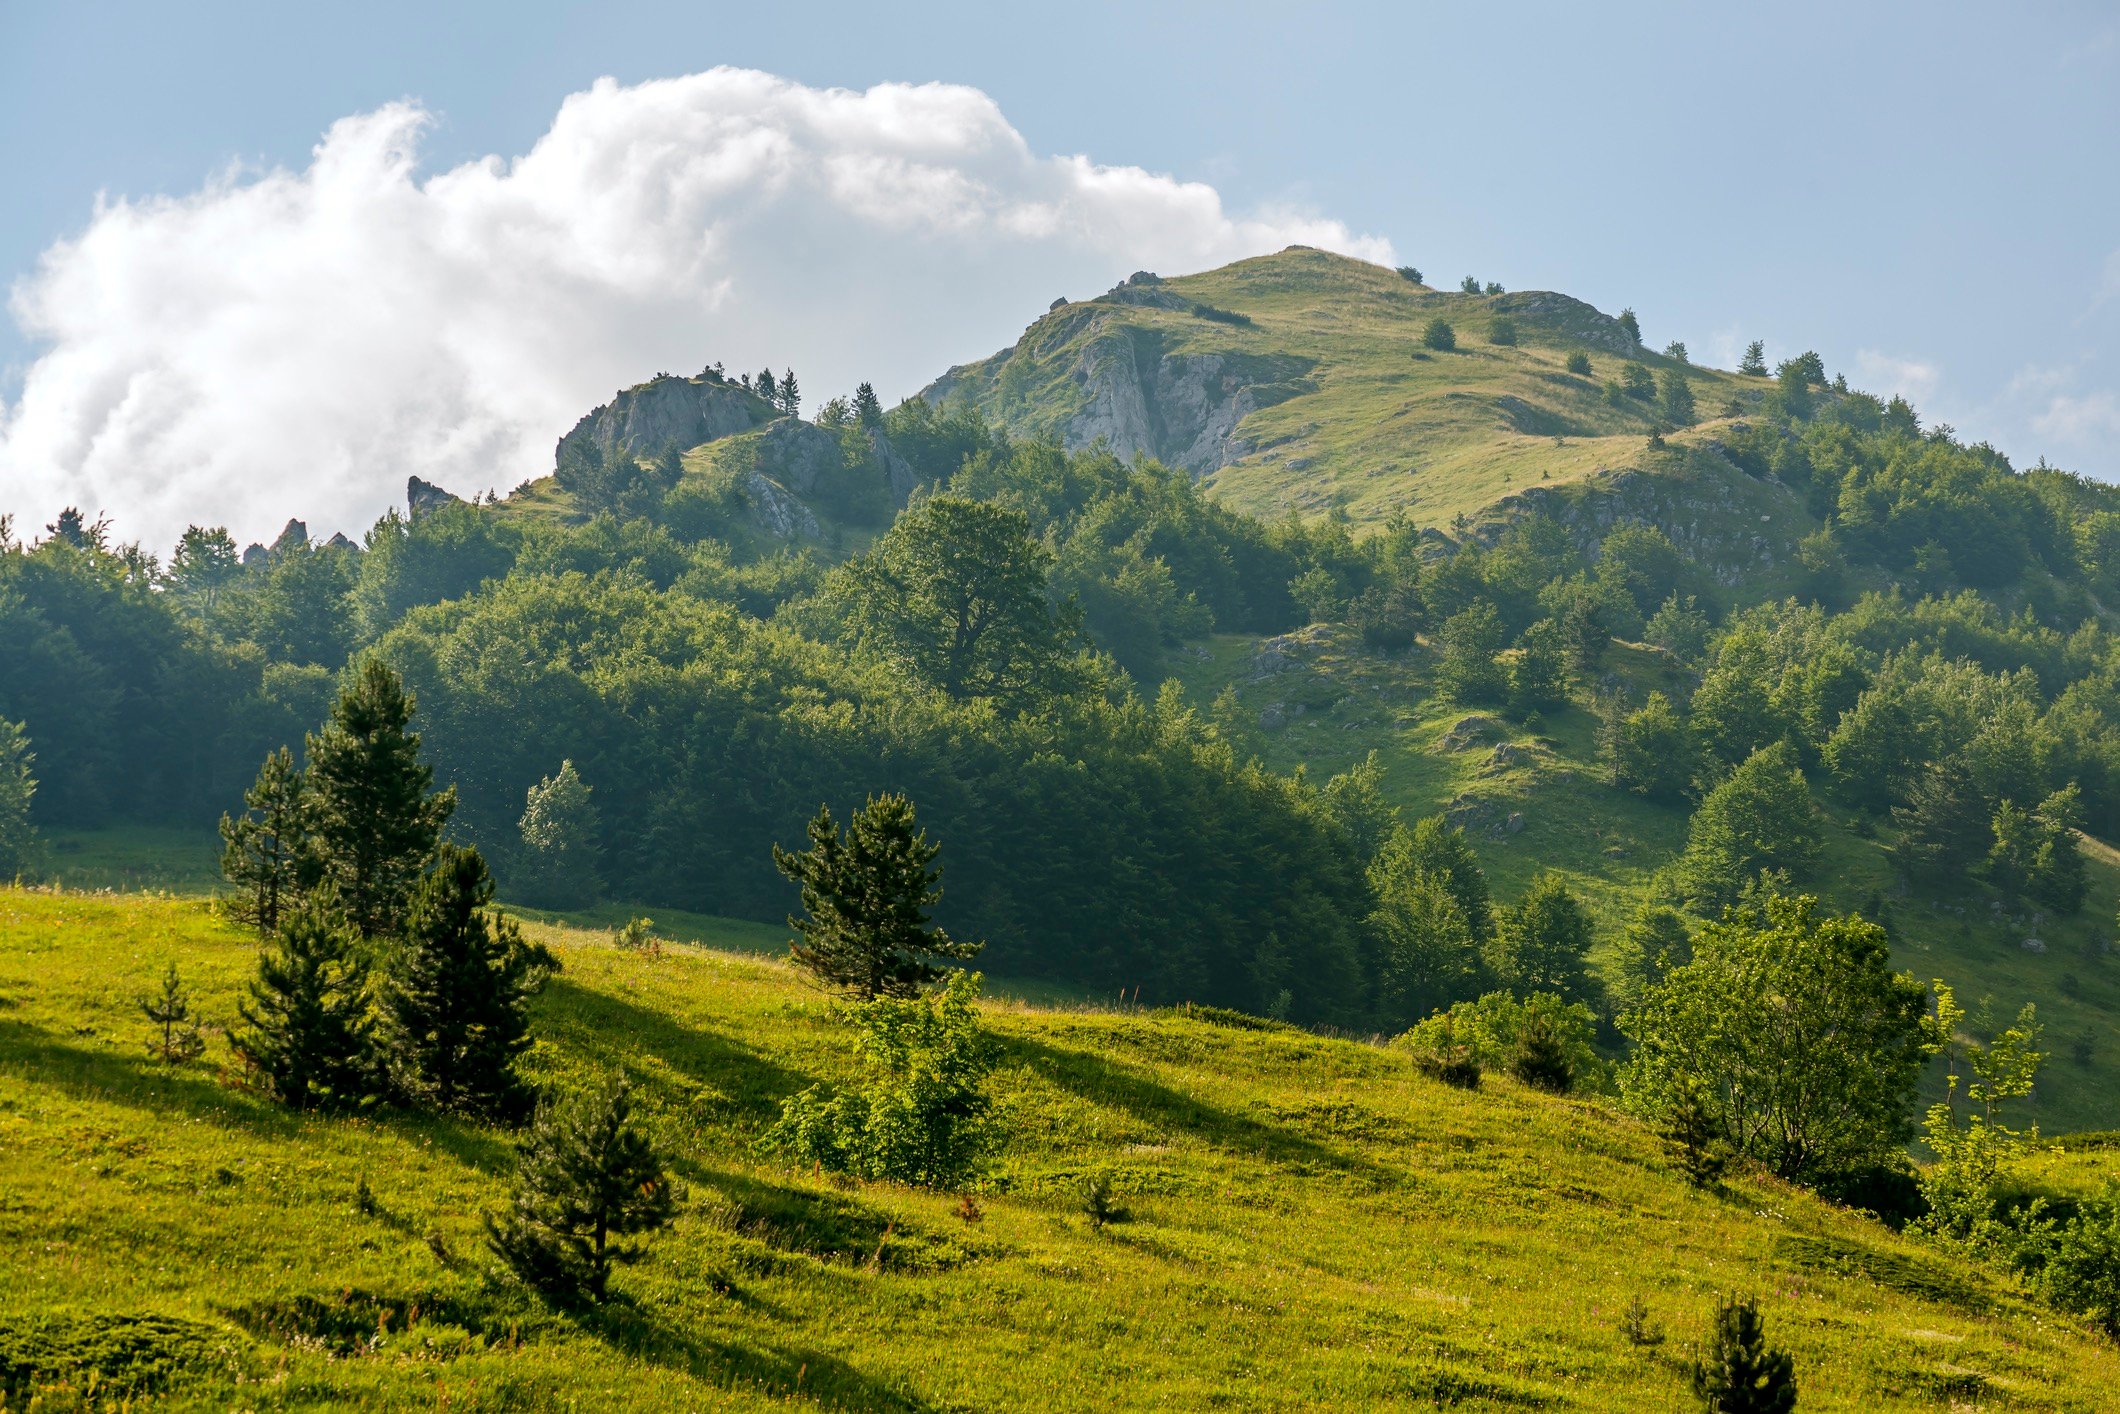 Hills and trees in Sutjeska National Park, Bosnia and Herzegovina